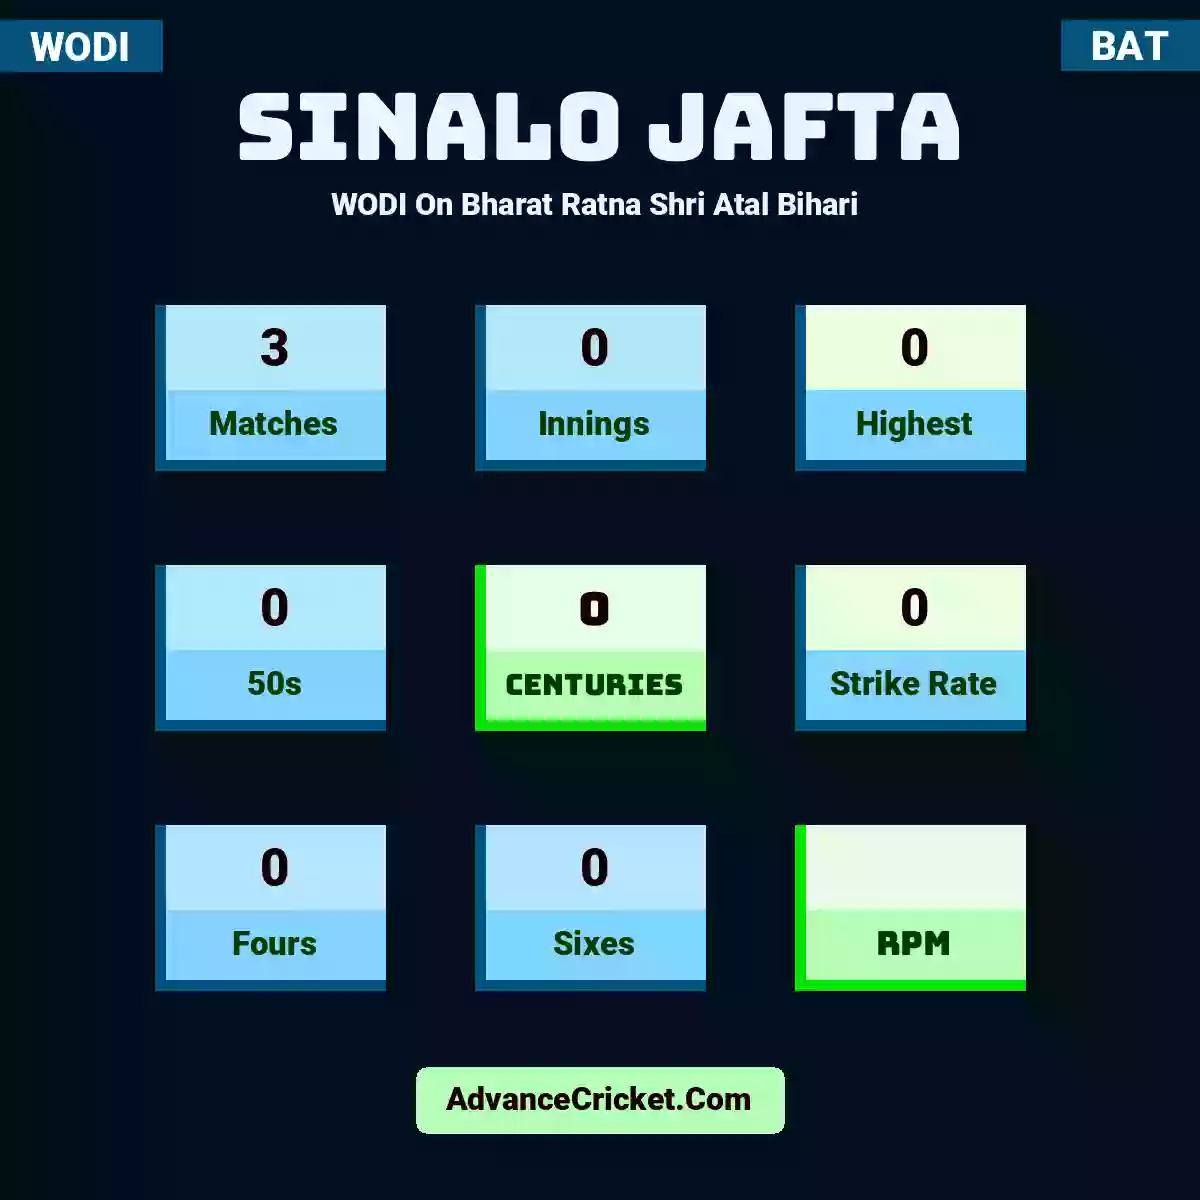 Sinalo Jafta WODI  On Bharat Ratna Shri Atal Bihari , Sinalo Jafta played 3 matches, scored 0 runs as highest, 0 half-centuries, and 0 centuries, with a strike rate of 0. S.Jafta hit 0 fours and 0 sixes.